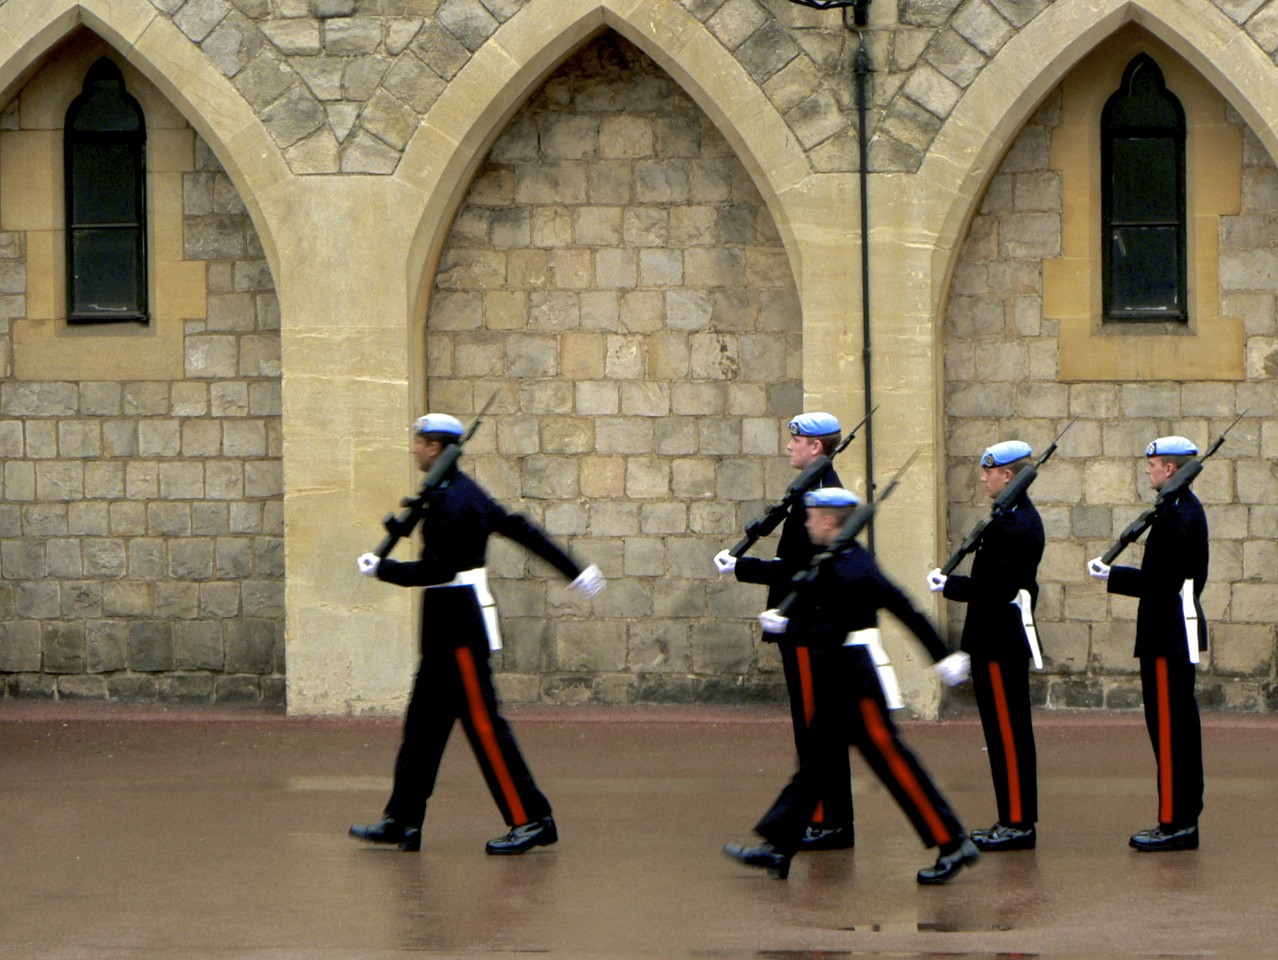 Boys in Uniform at Windsor